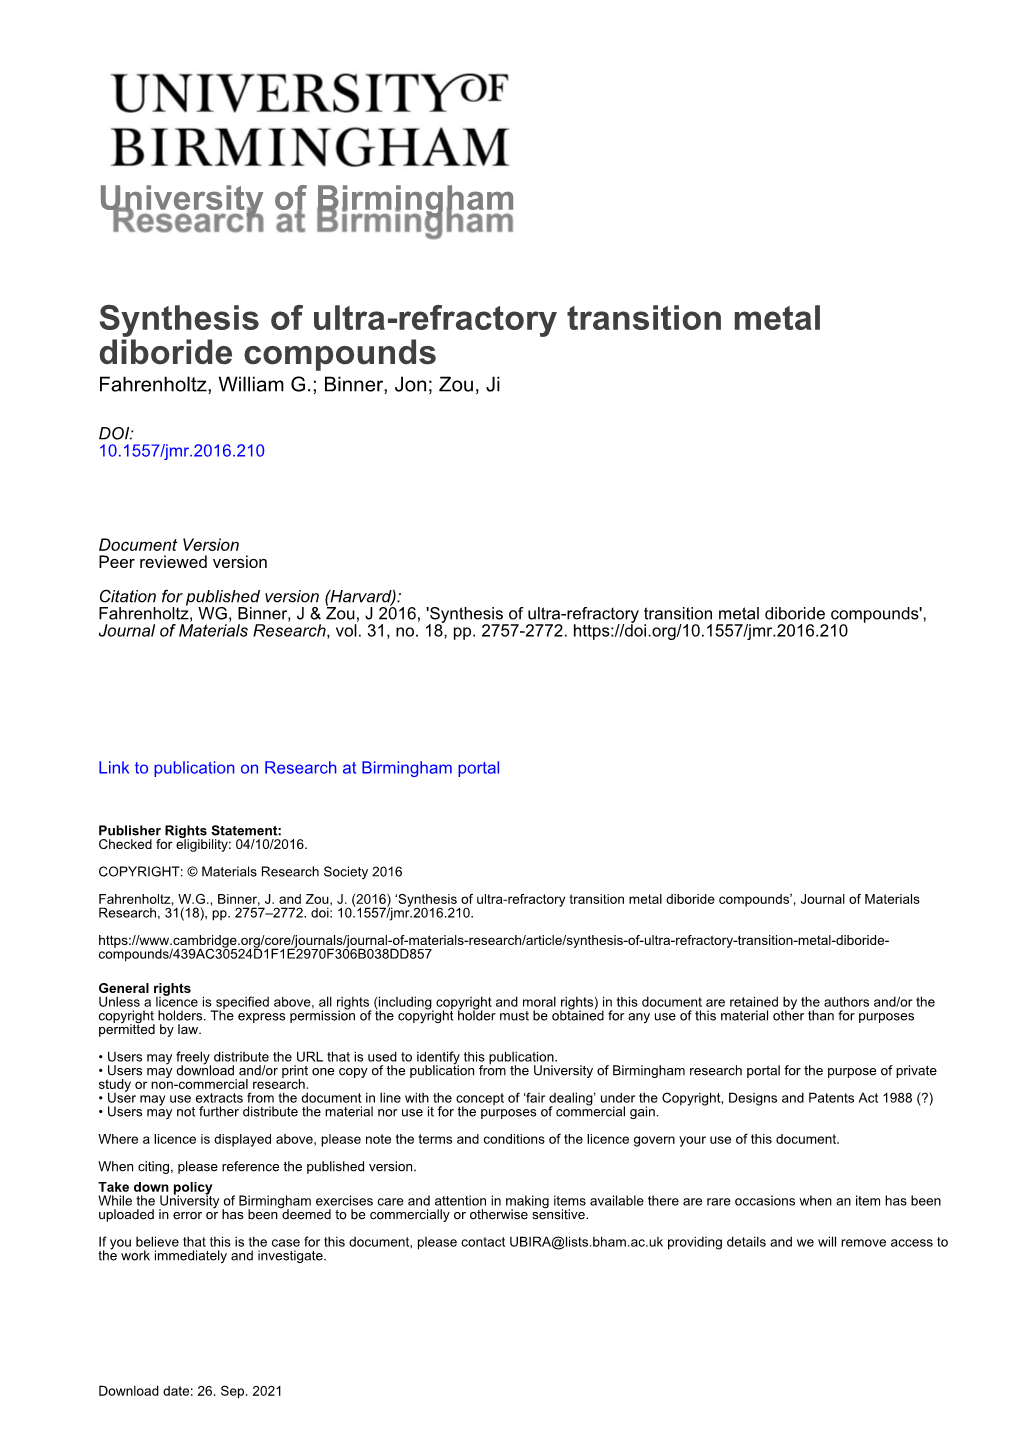 Synthesis of Ultra-Refractory Transition Metal Diboride Compounds Fahrenholtz, William G.; Binner, Jon; Zou, Ji